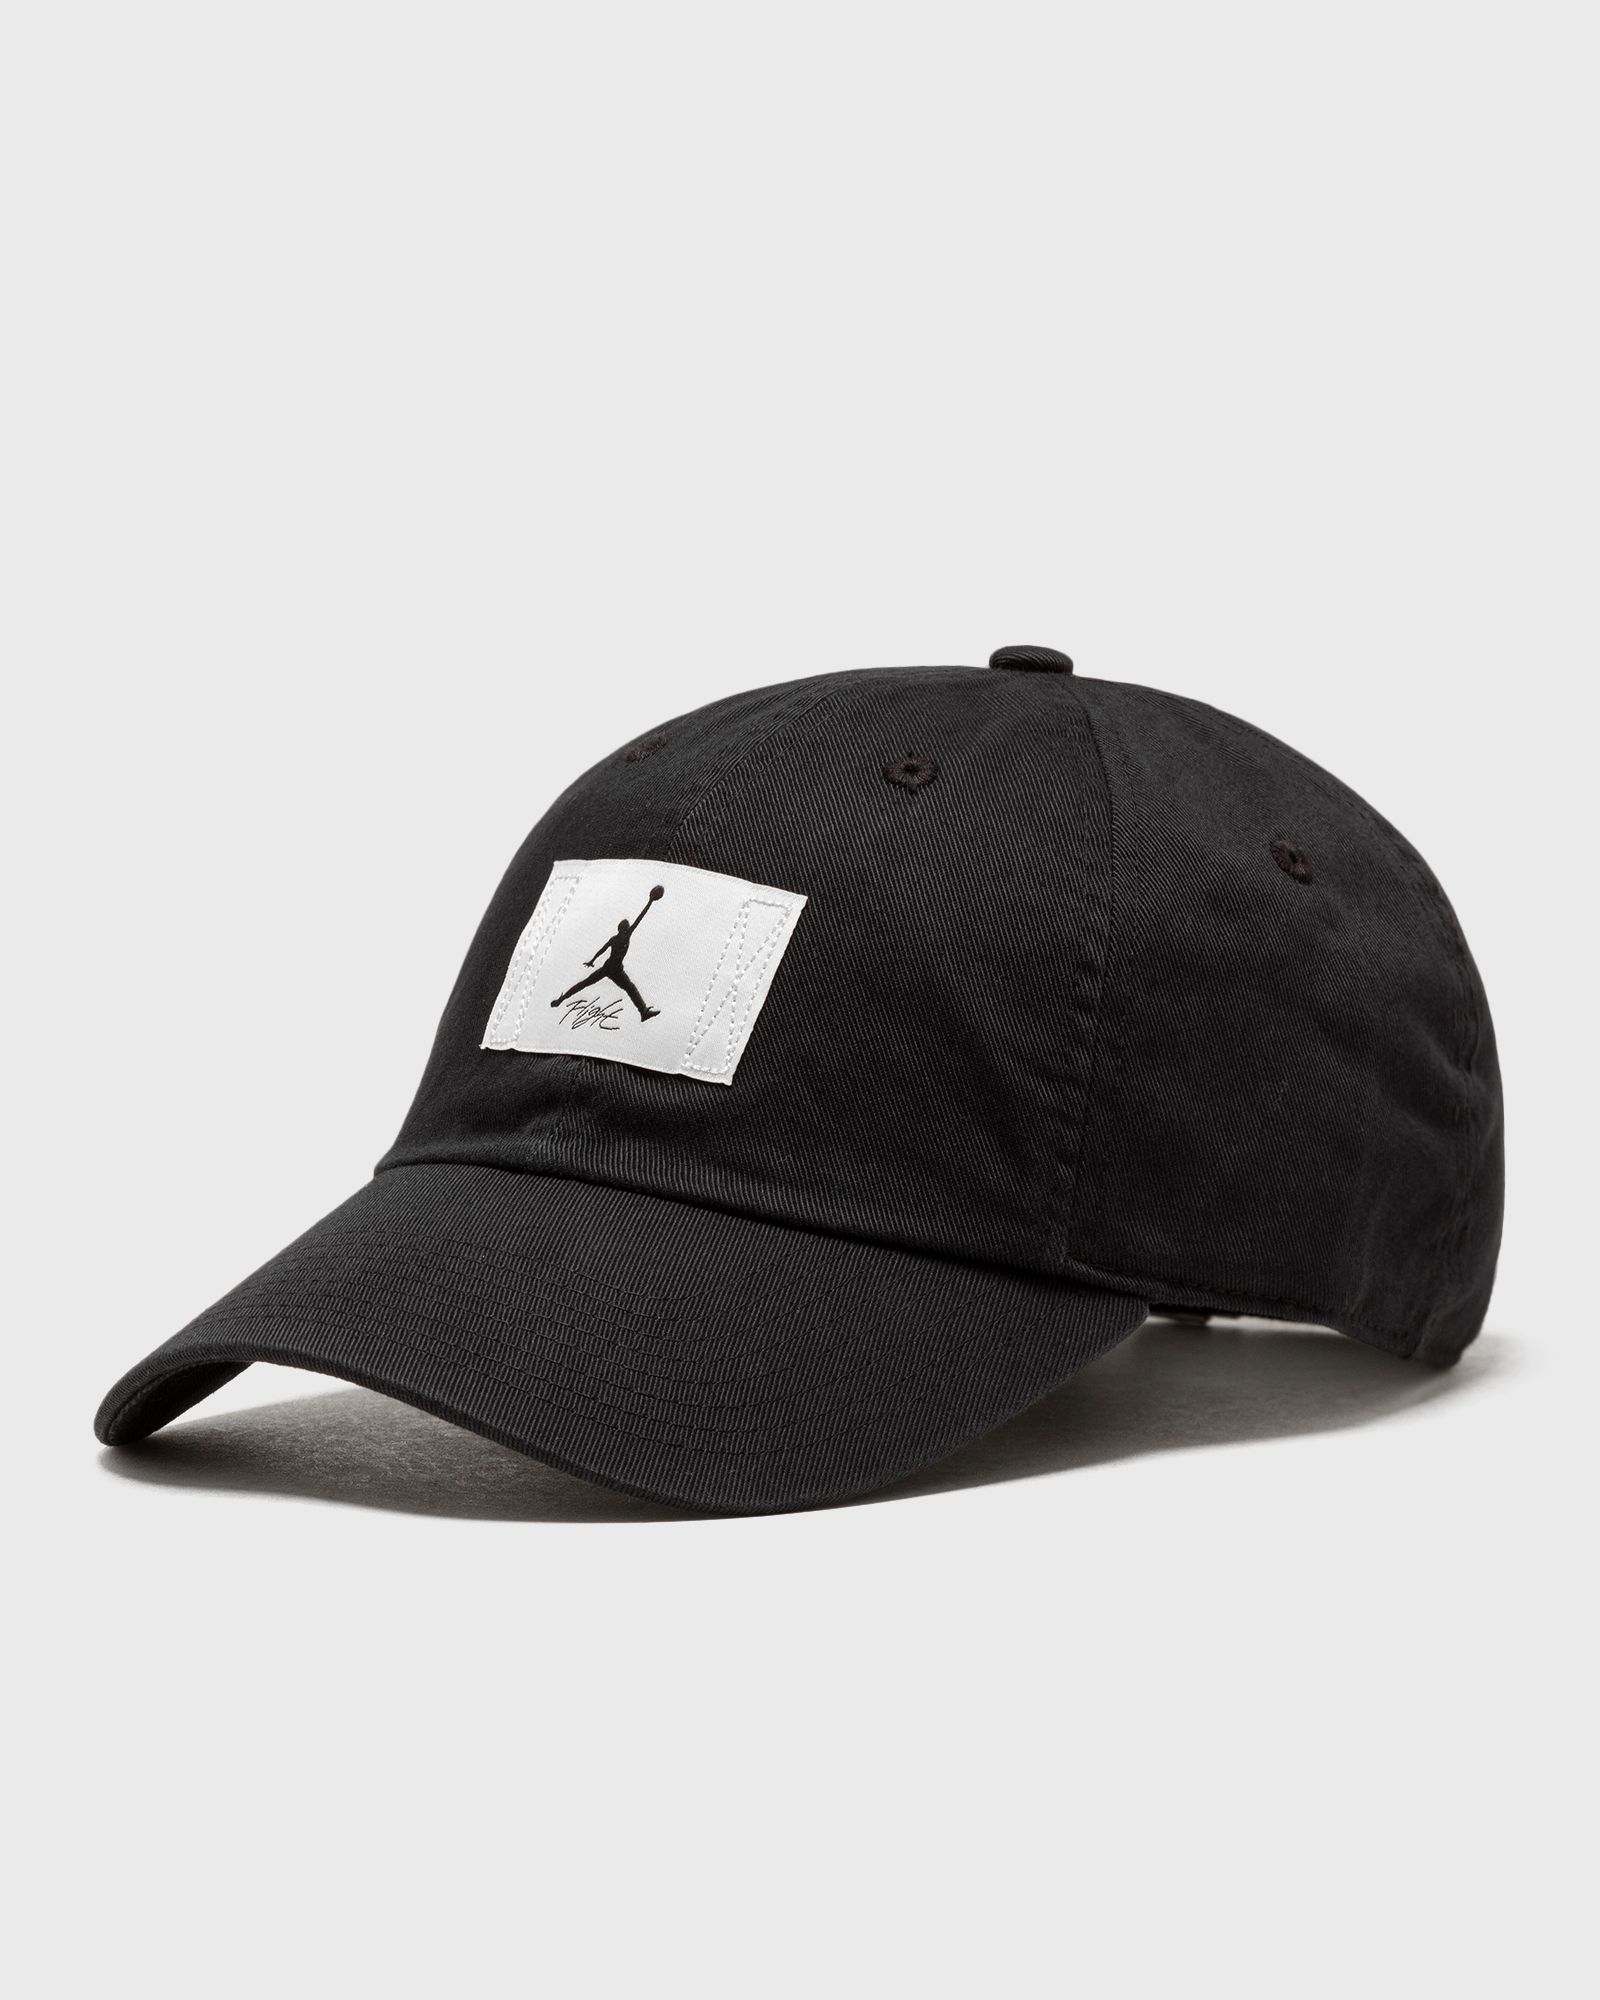 Jordan Club Cap Adjustable Hat men Caps black in Größe:S/M von Jordan